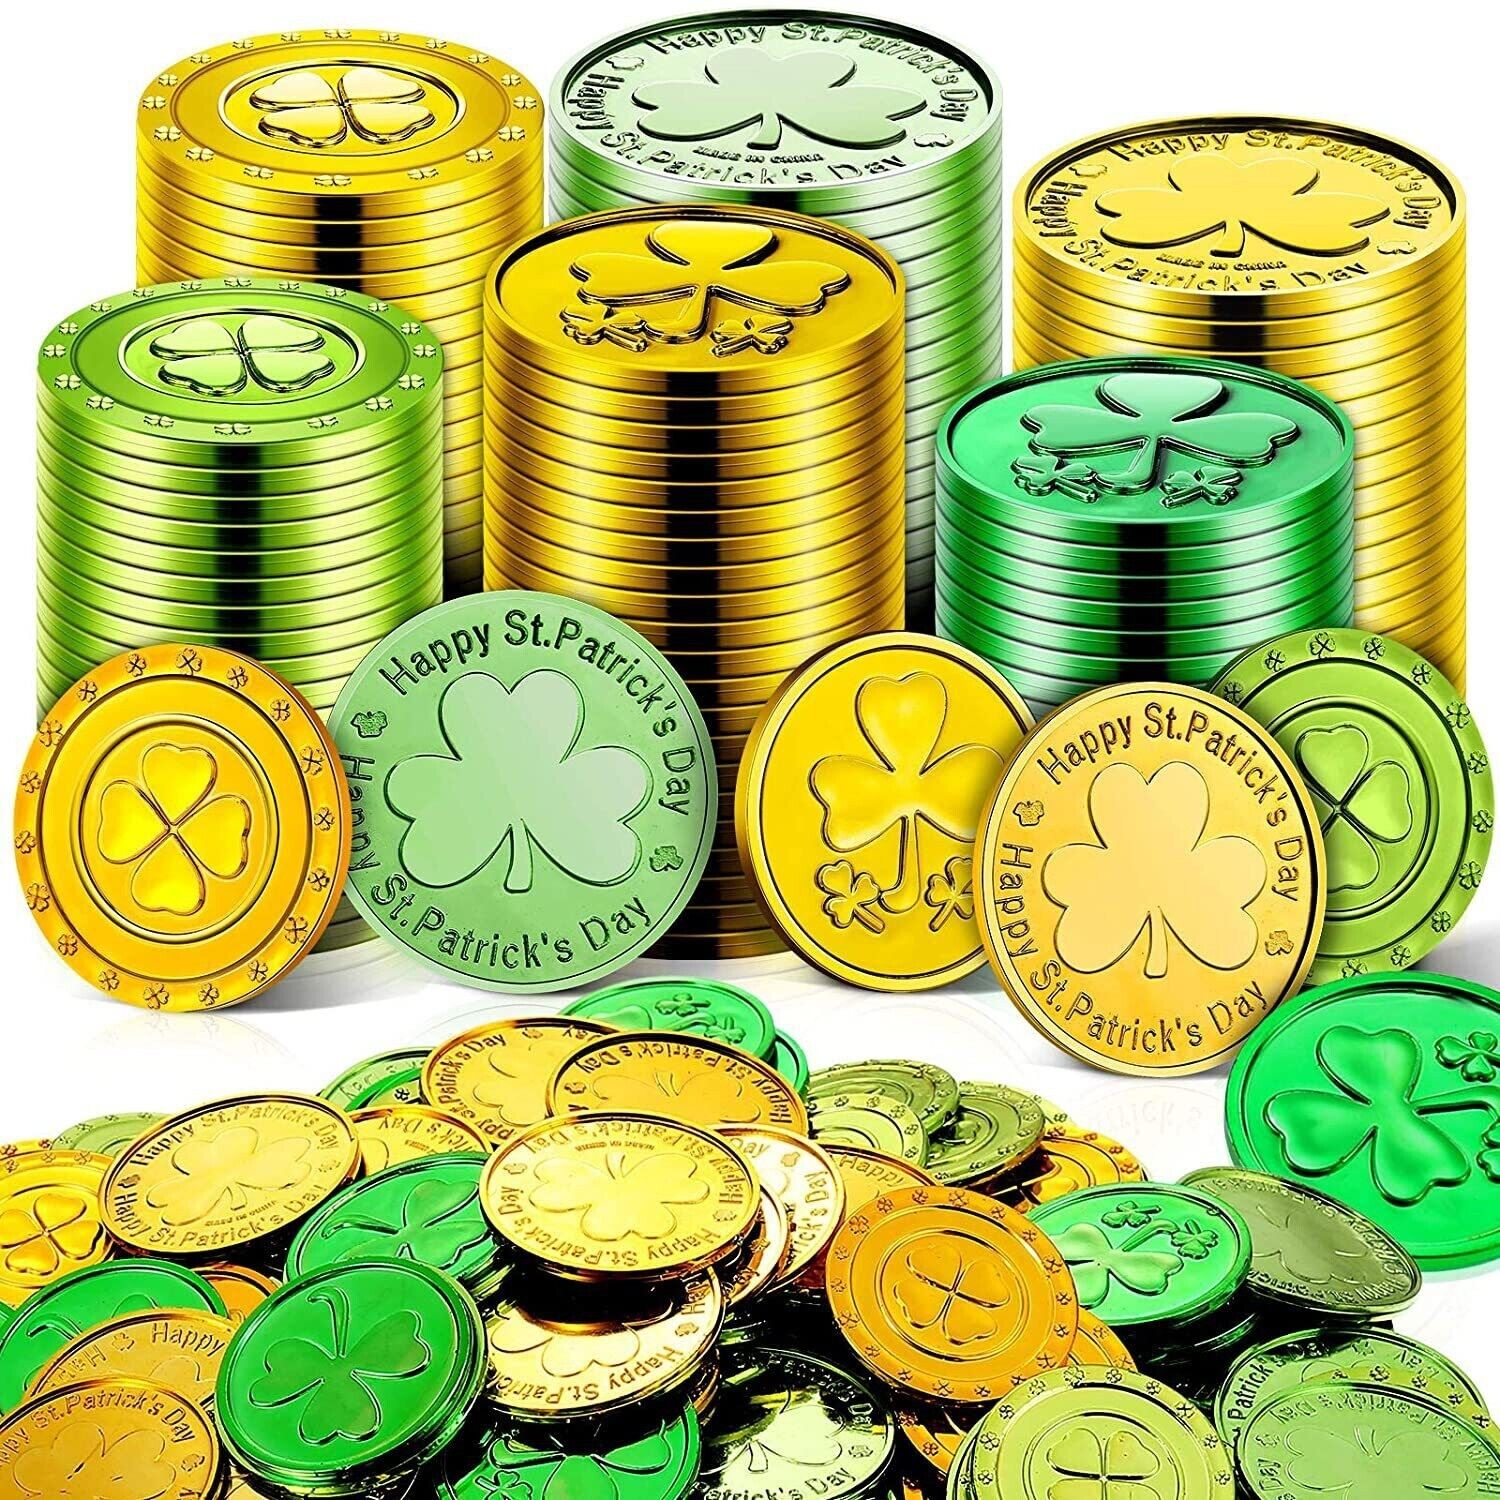 St. Patrick's Lucky Coins Plastic Shamrock Leprechaun 3-Leaf Clover Coins 100pcs